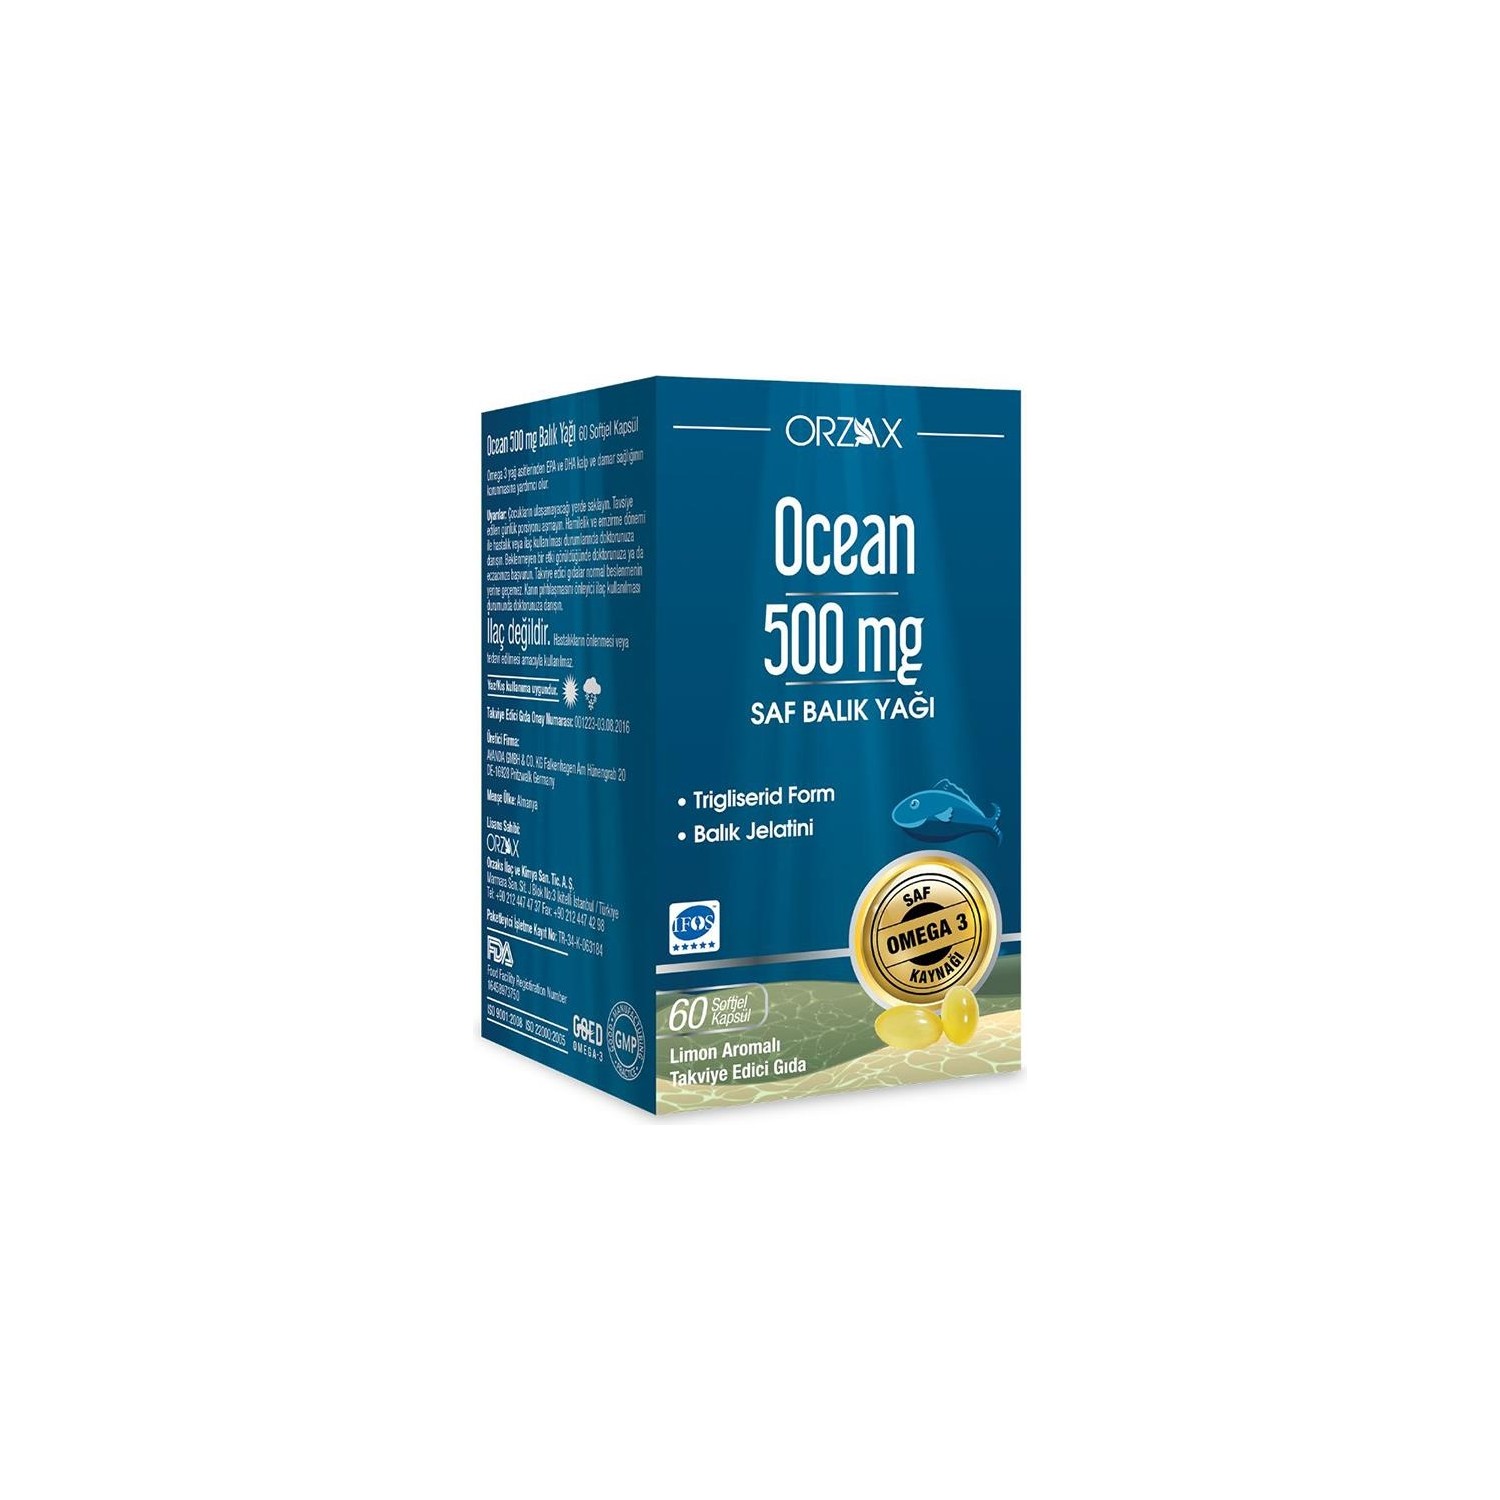 Рыбий жир Orzax Ocean 500 мг, 60 капсул рыбий жир со вкусом лимона ocean 60 капсул 500 мг